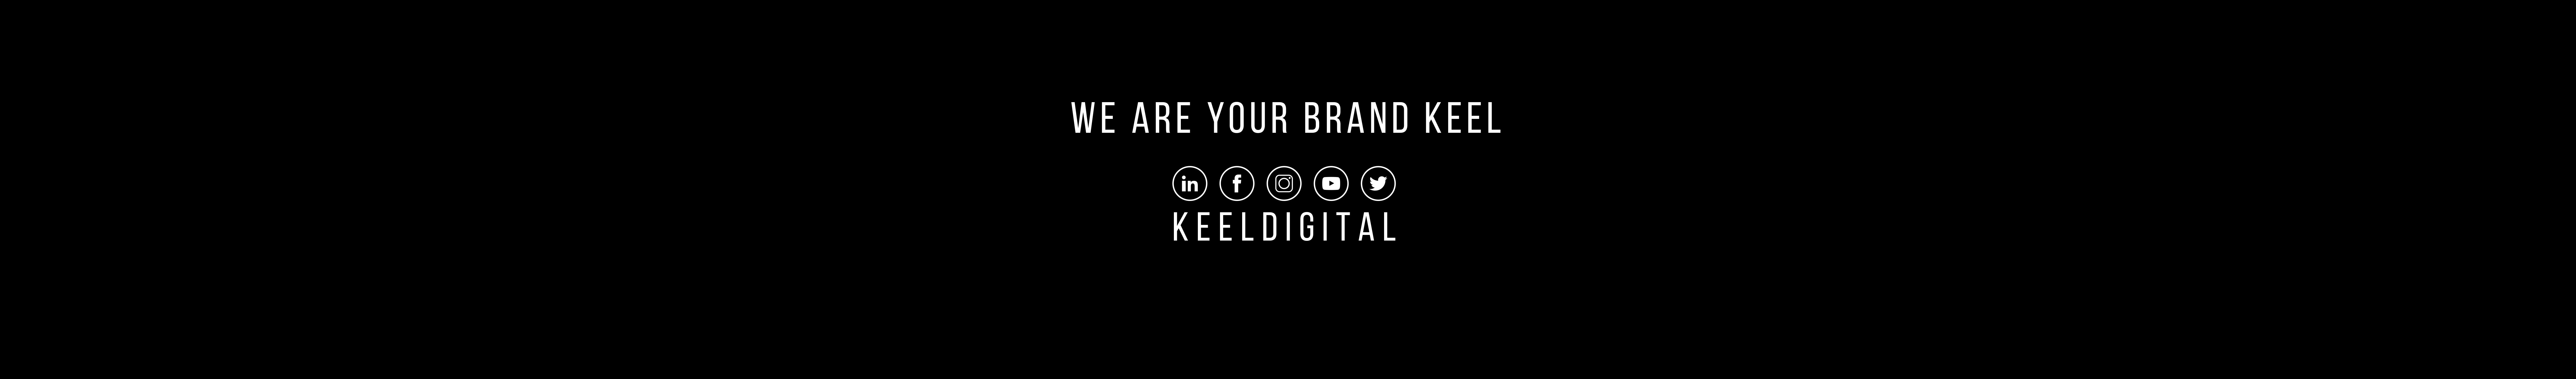 Keel Digital's profile banner